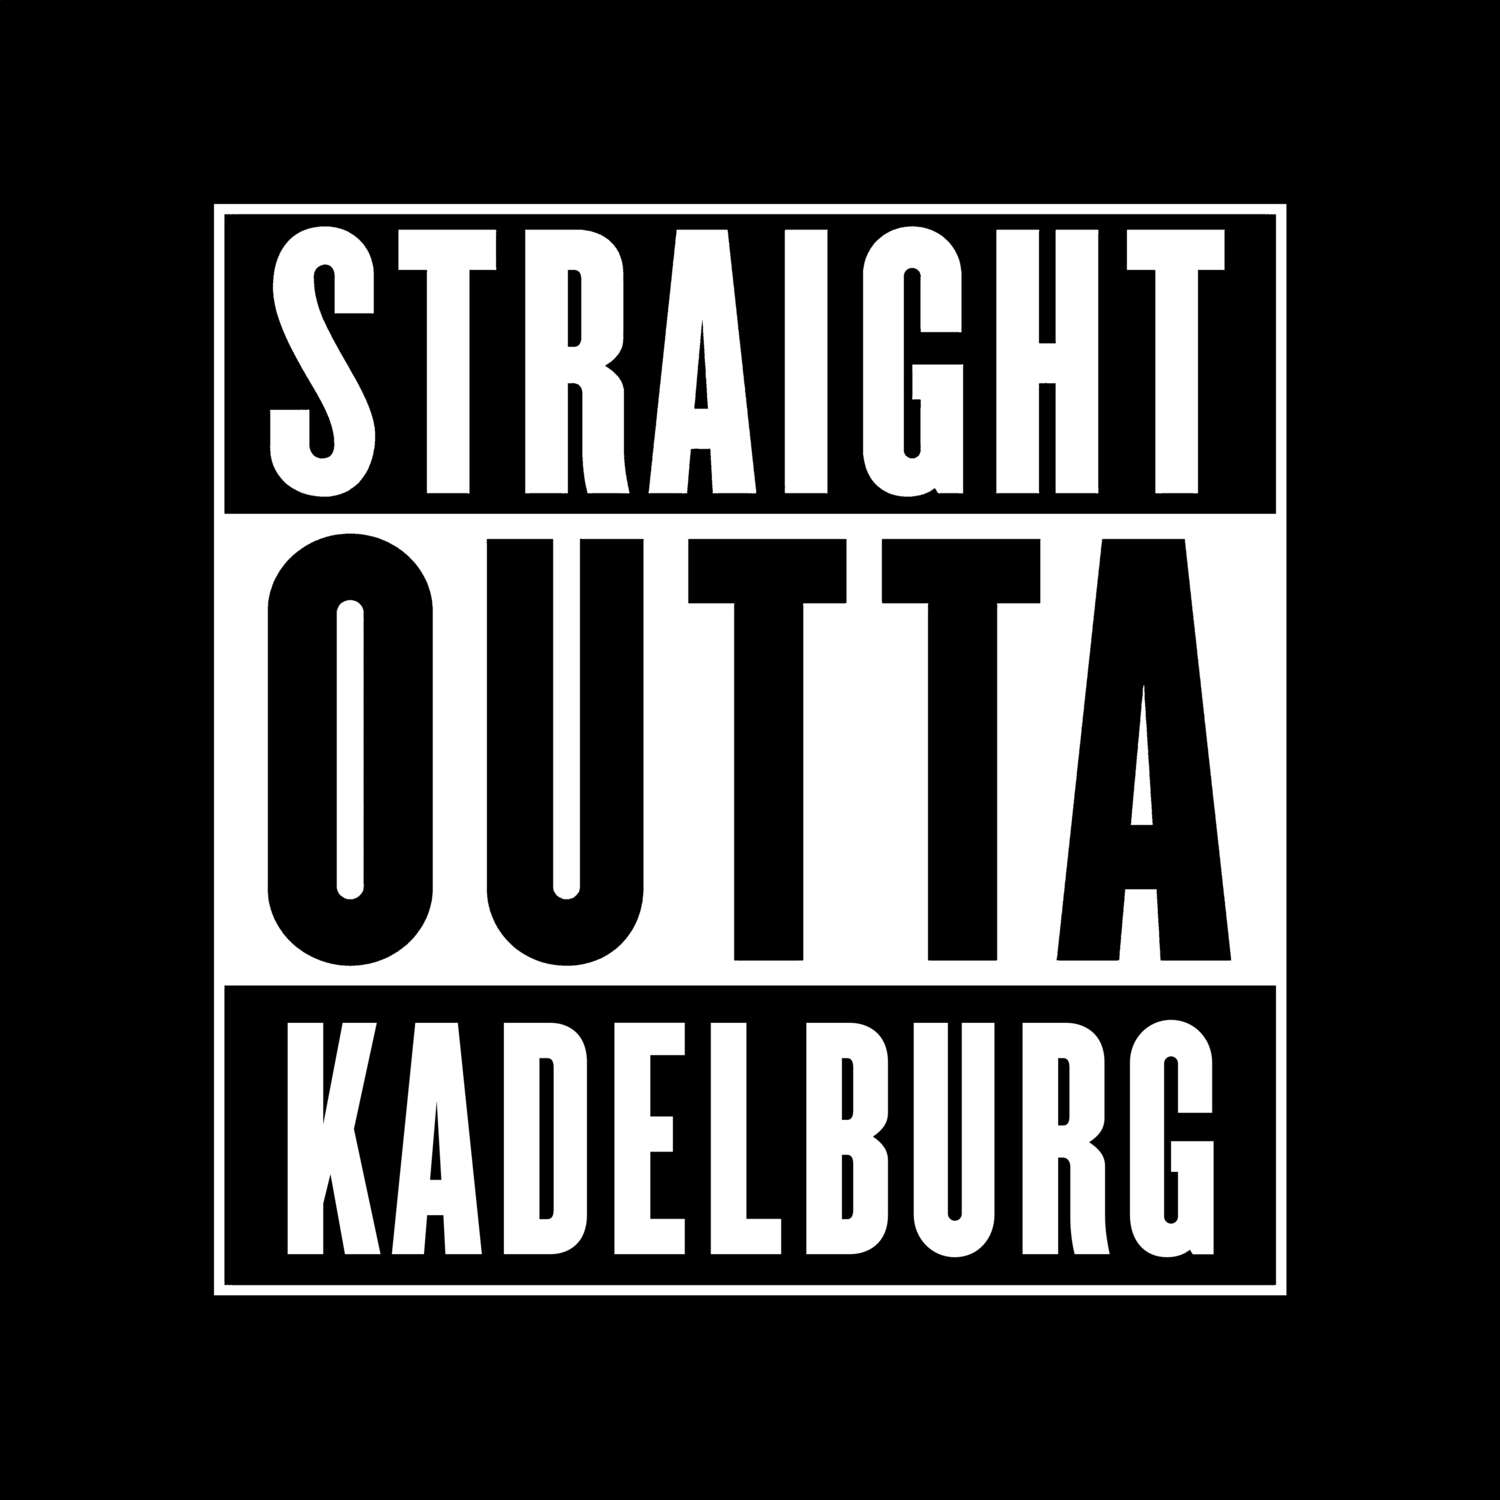 Kadelburg T-Shirt »Straight Outta«